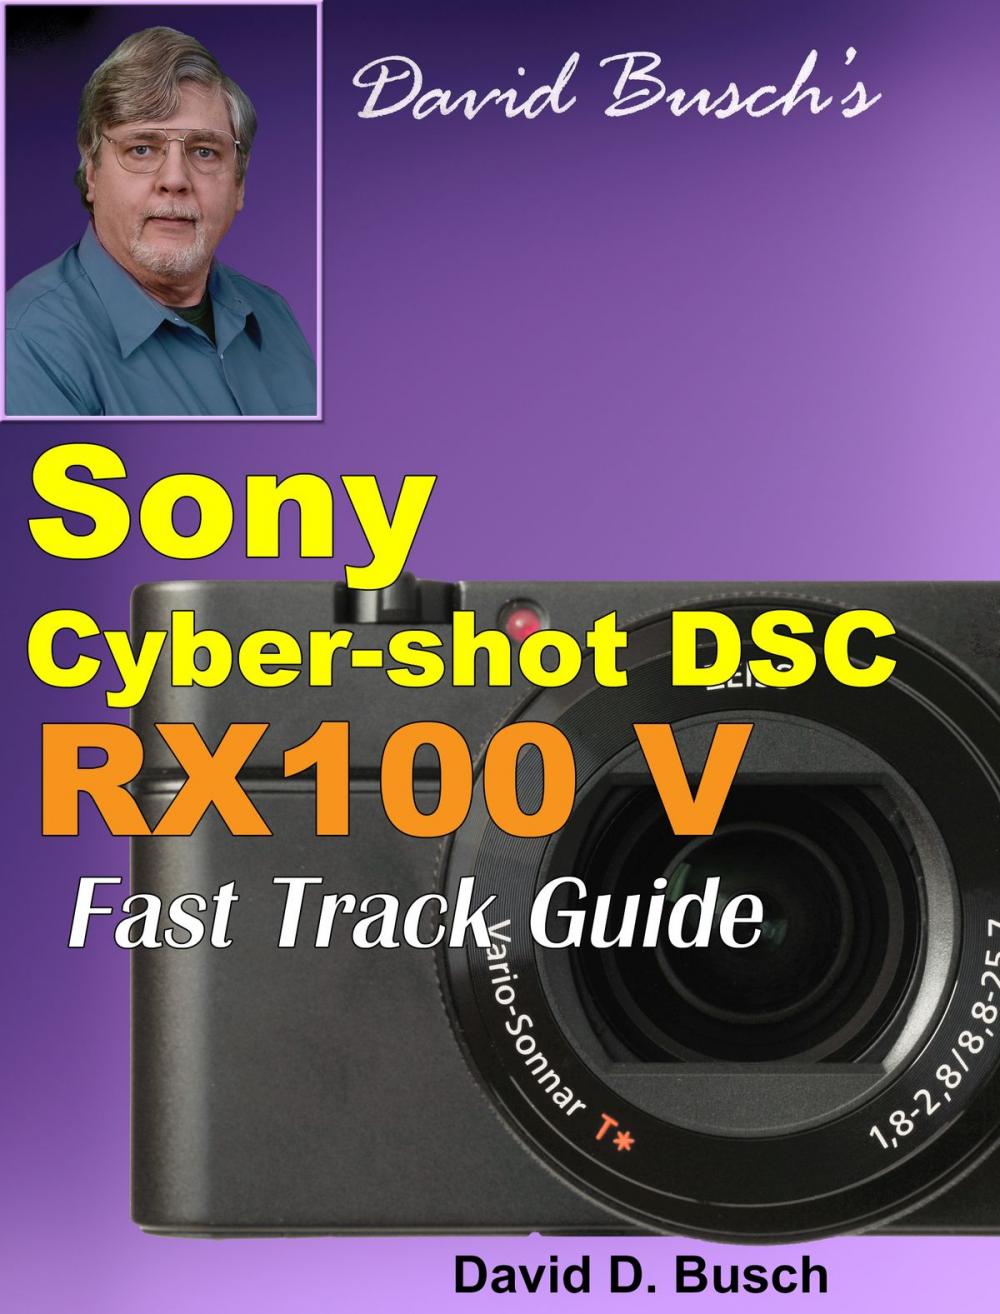 Big bigCover of David Busch's Sony Cyber-shot DSC RX100 V FAST TRACK GUIDE